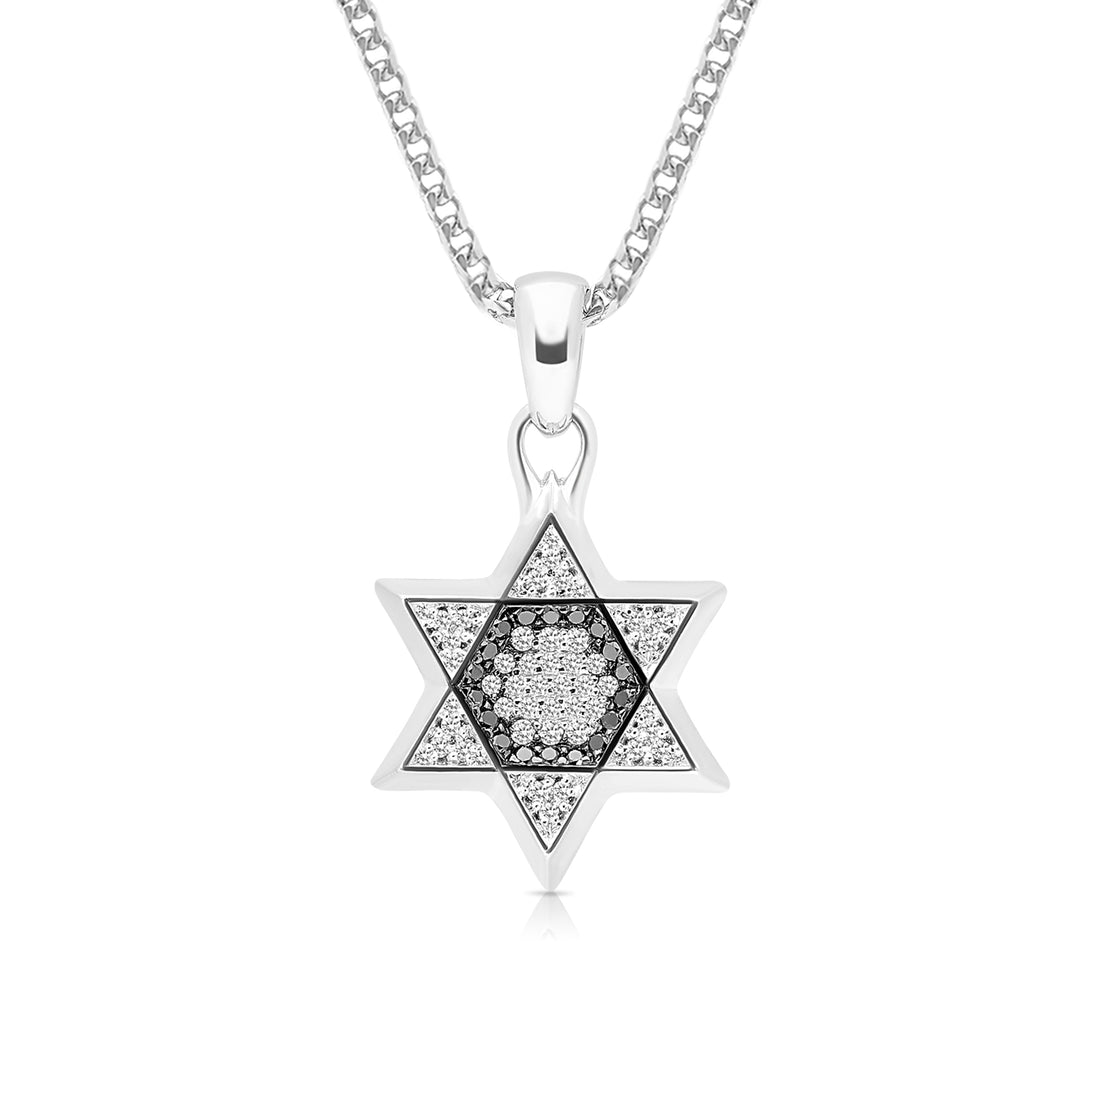 Star of David with White and Black Diamonds Pendant - .23 Carat